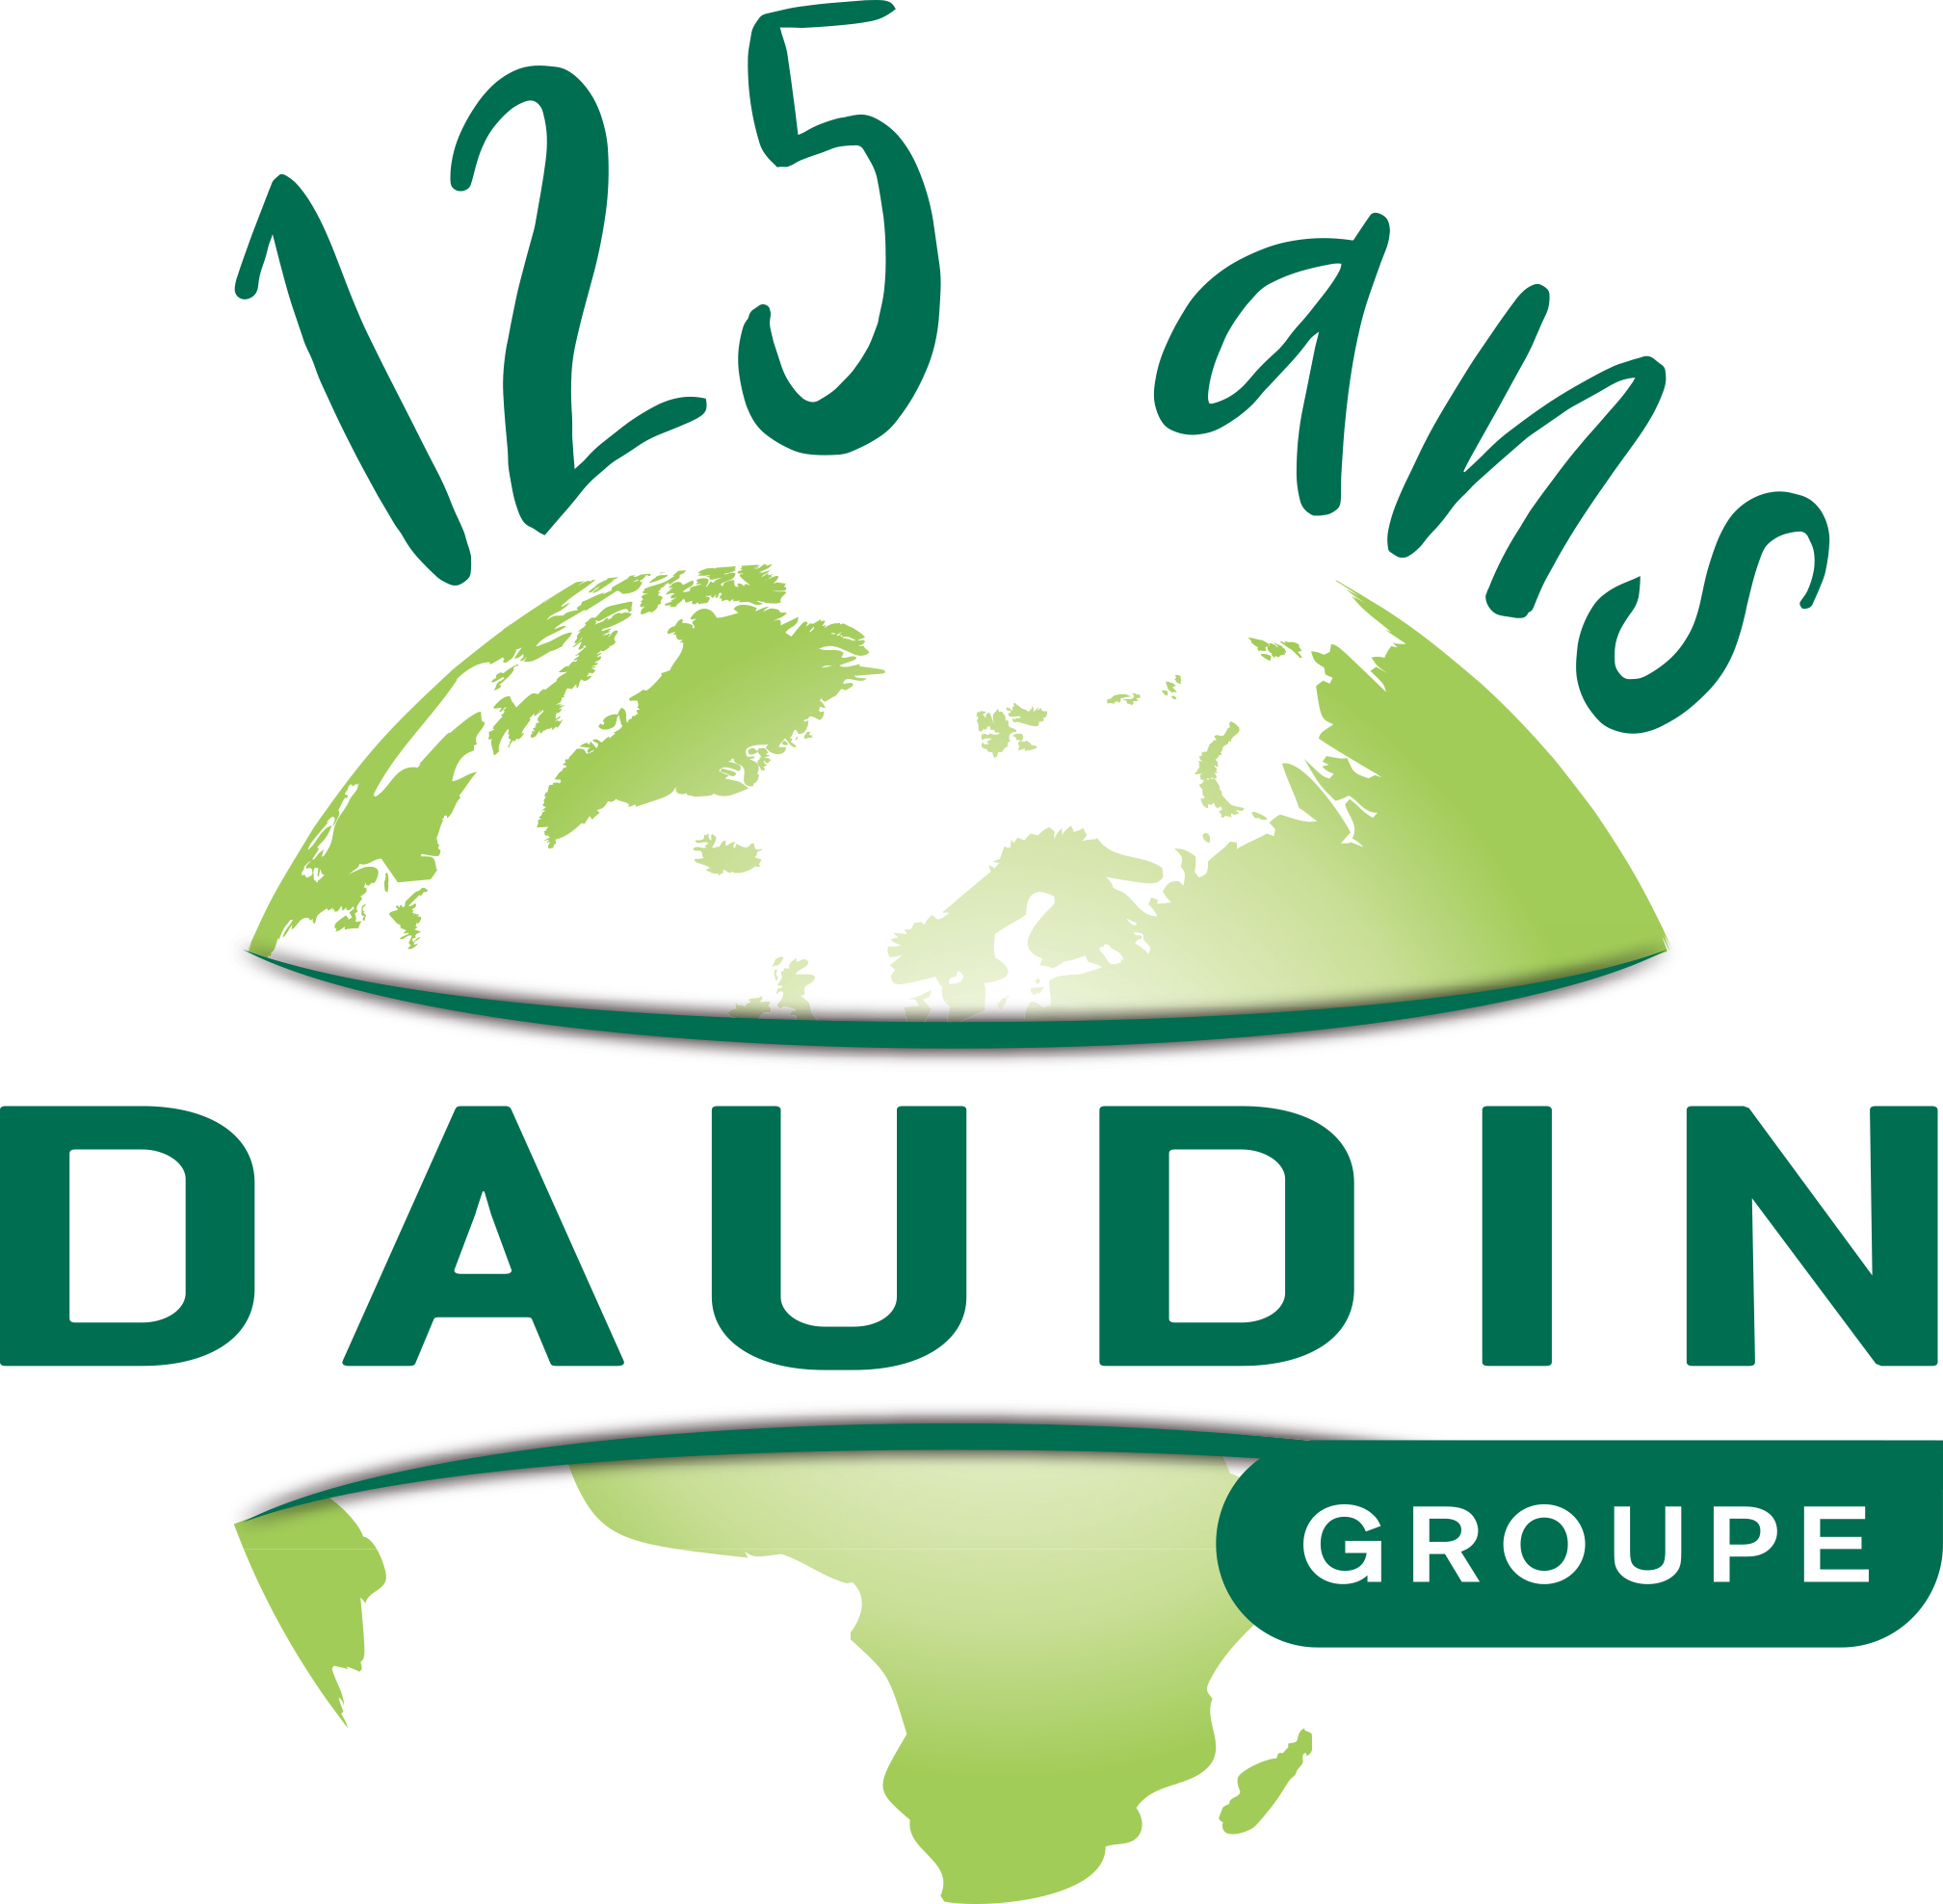 Daudin Groupe